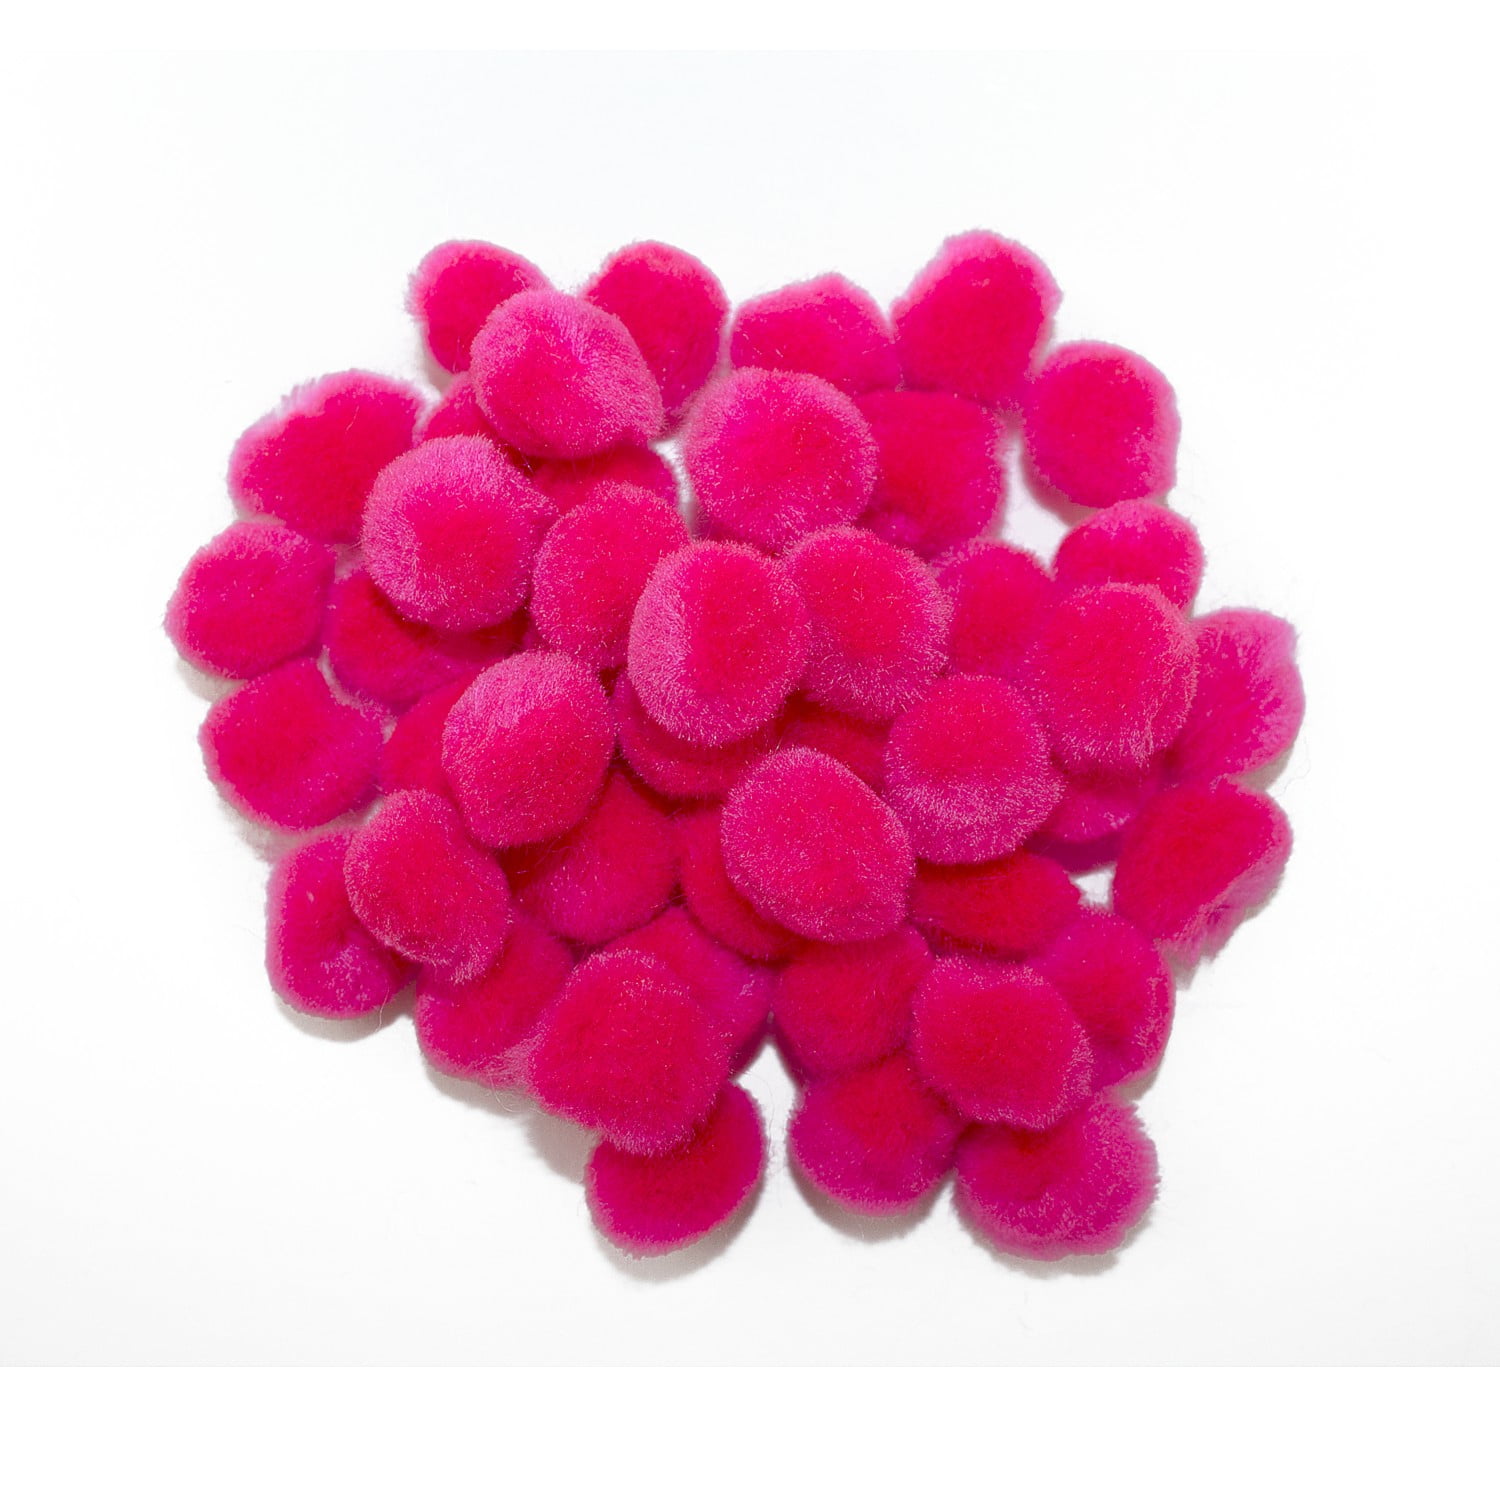 2-1/2 Inch Neon Pink Craft Pom Poms 15 Pieces